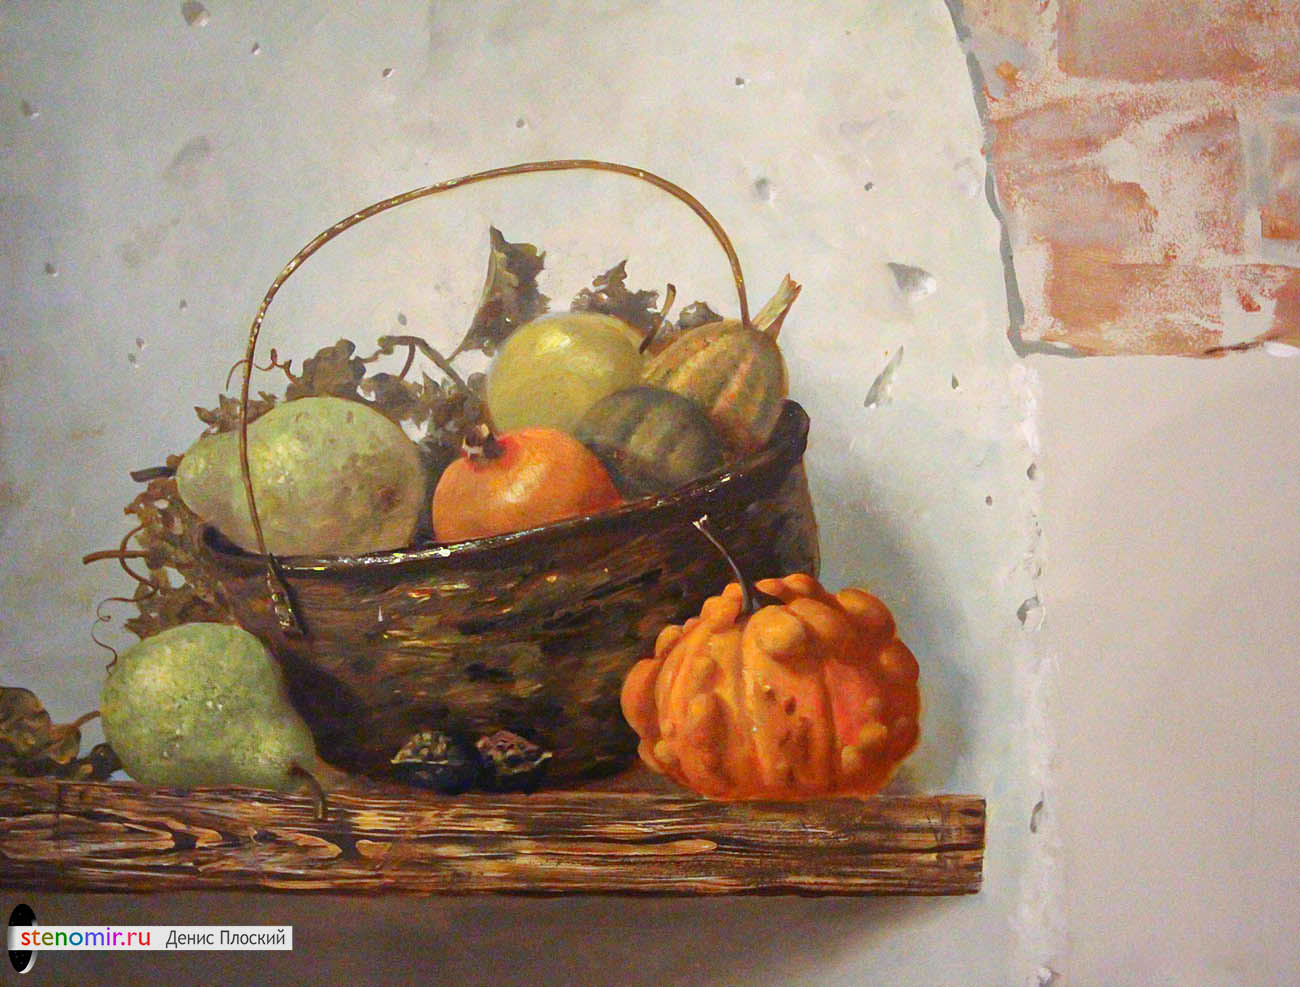 нарисованная корзина с фруктами акриловыми красками на стене